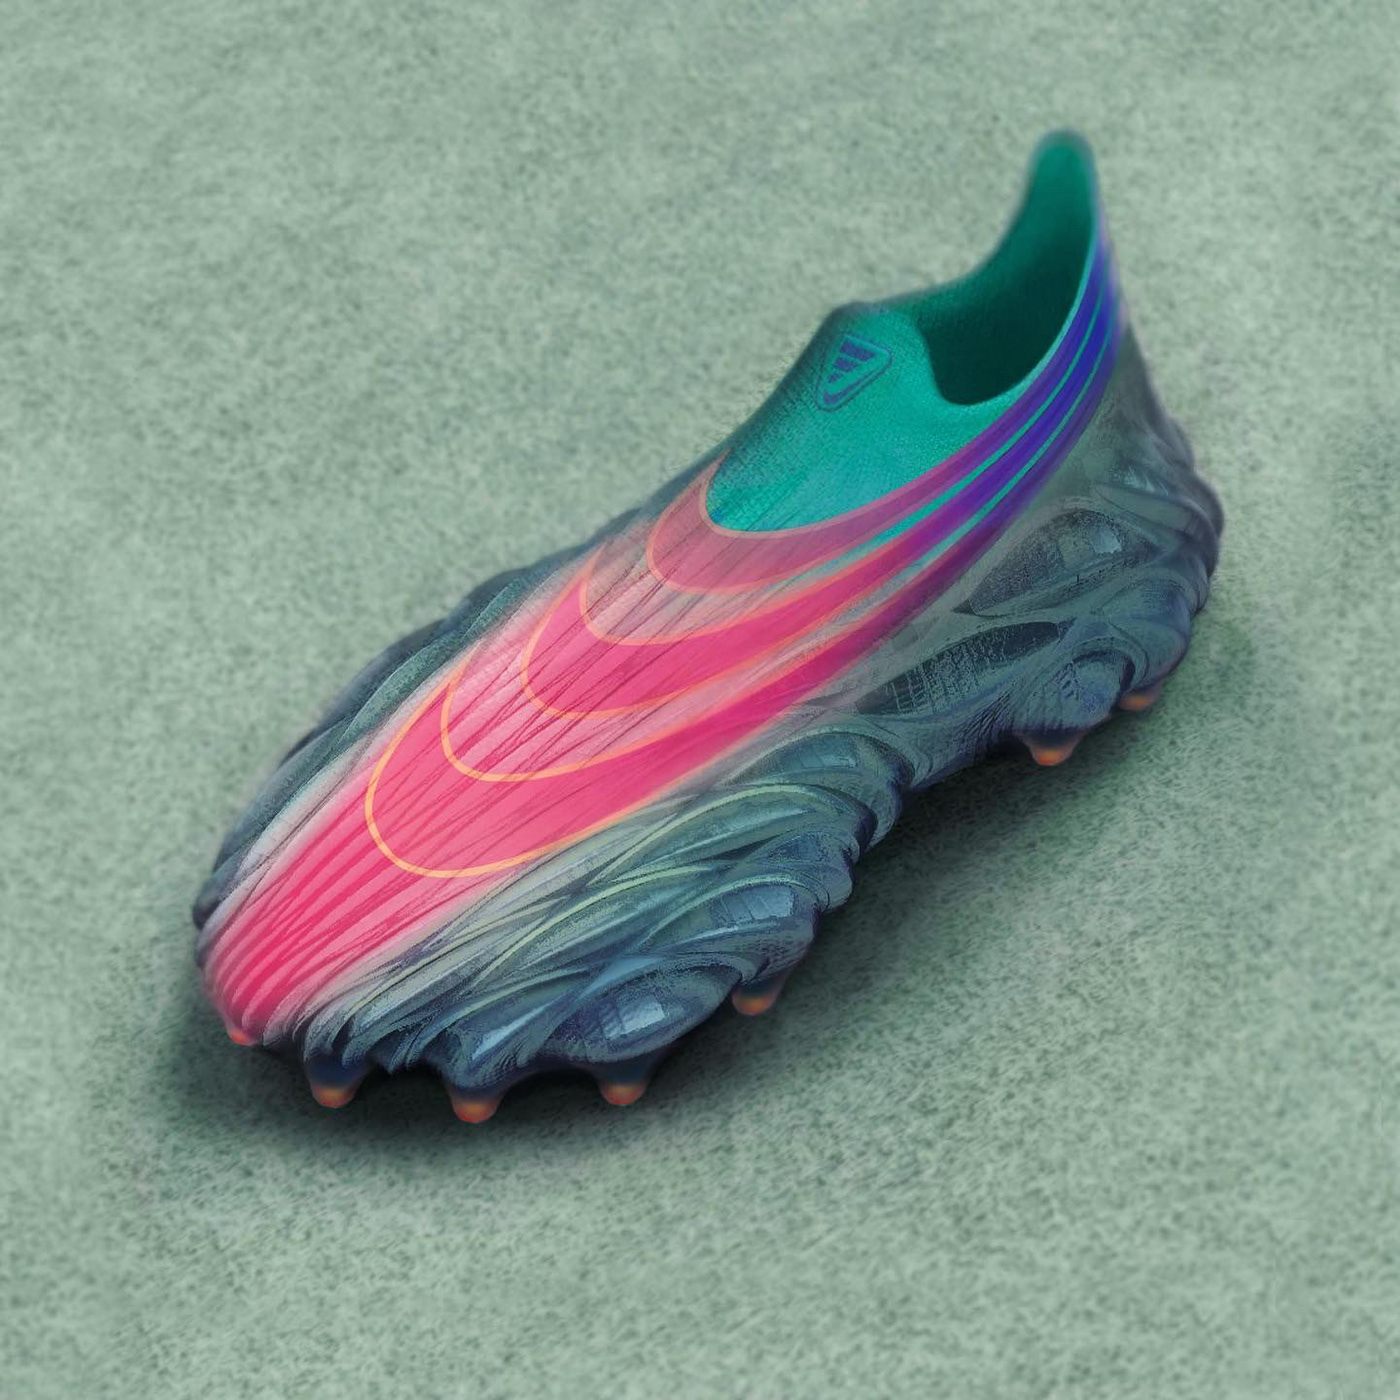 Nike x Adidas Soccer Boot